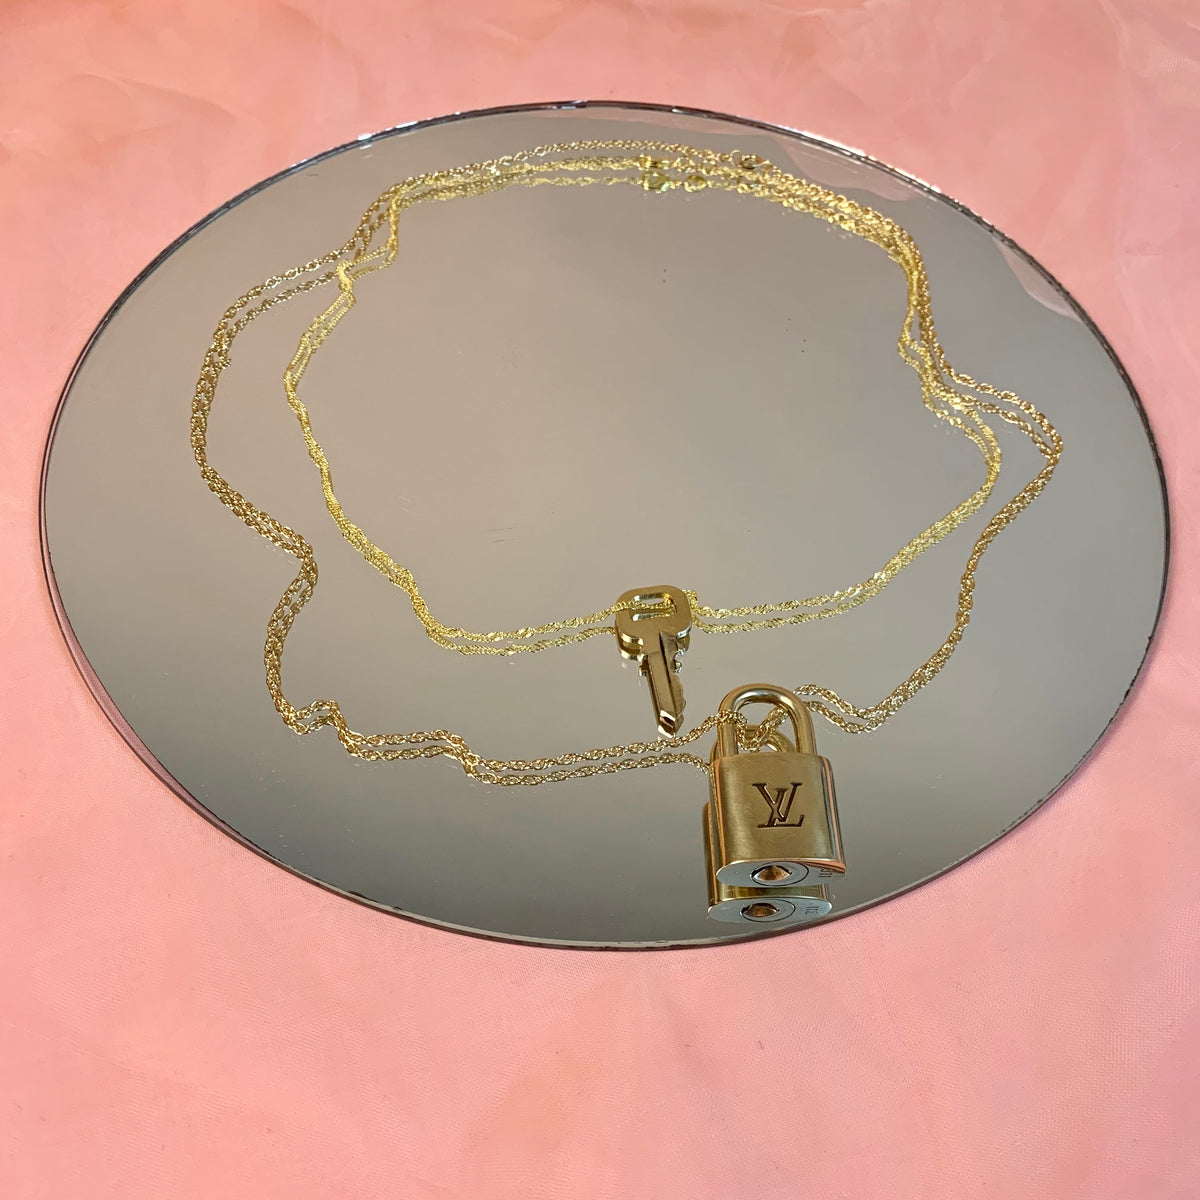 Repurposed lock + key necklace duo – Shop Journal Vintage